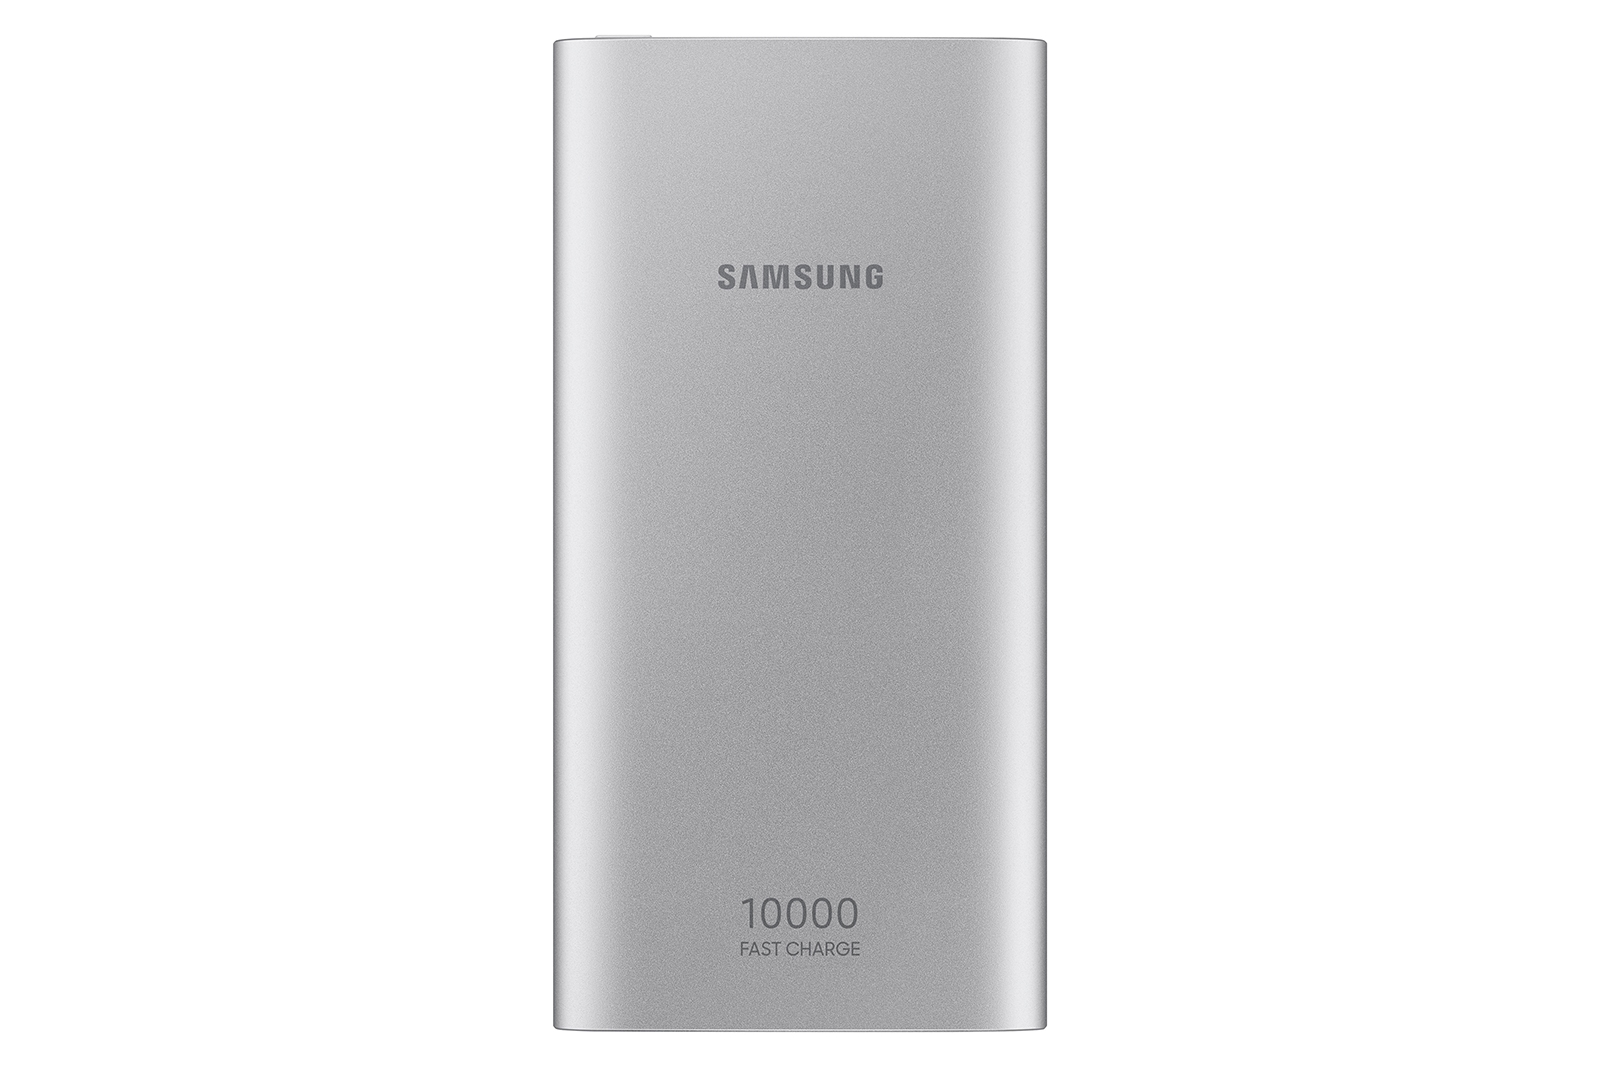 Samsung Powerbank 10000 mAh - Fast Charge Induktives Laden - Neuwertig!